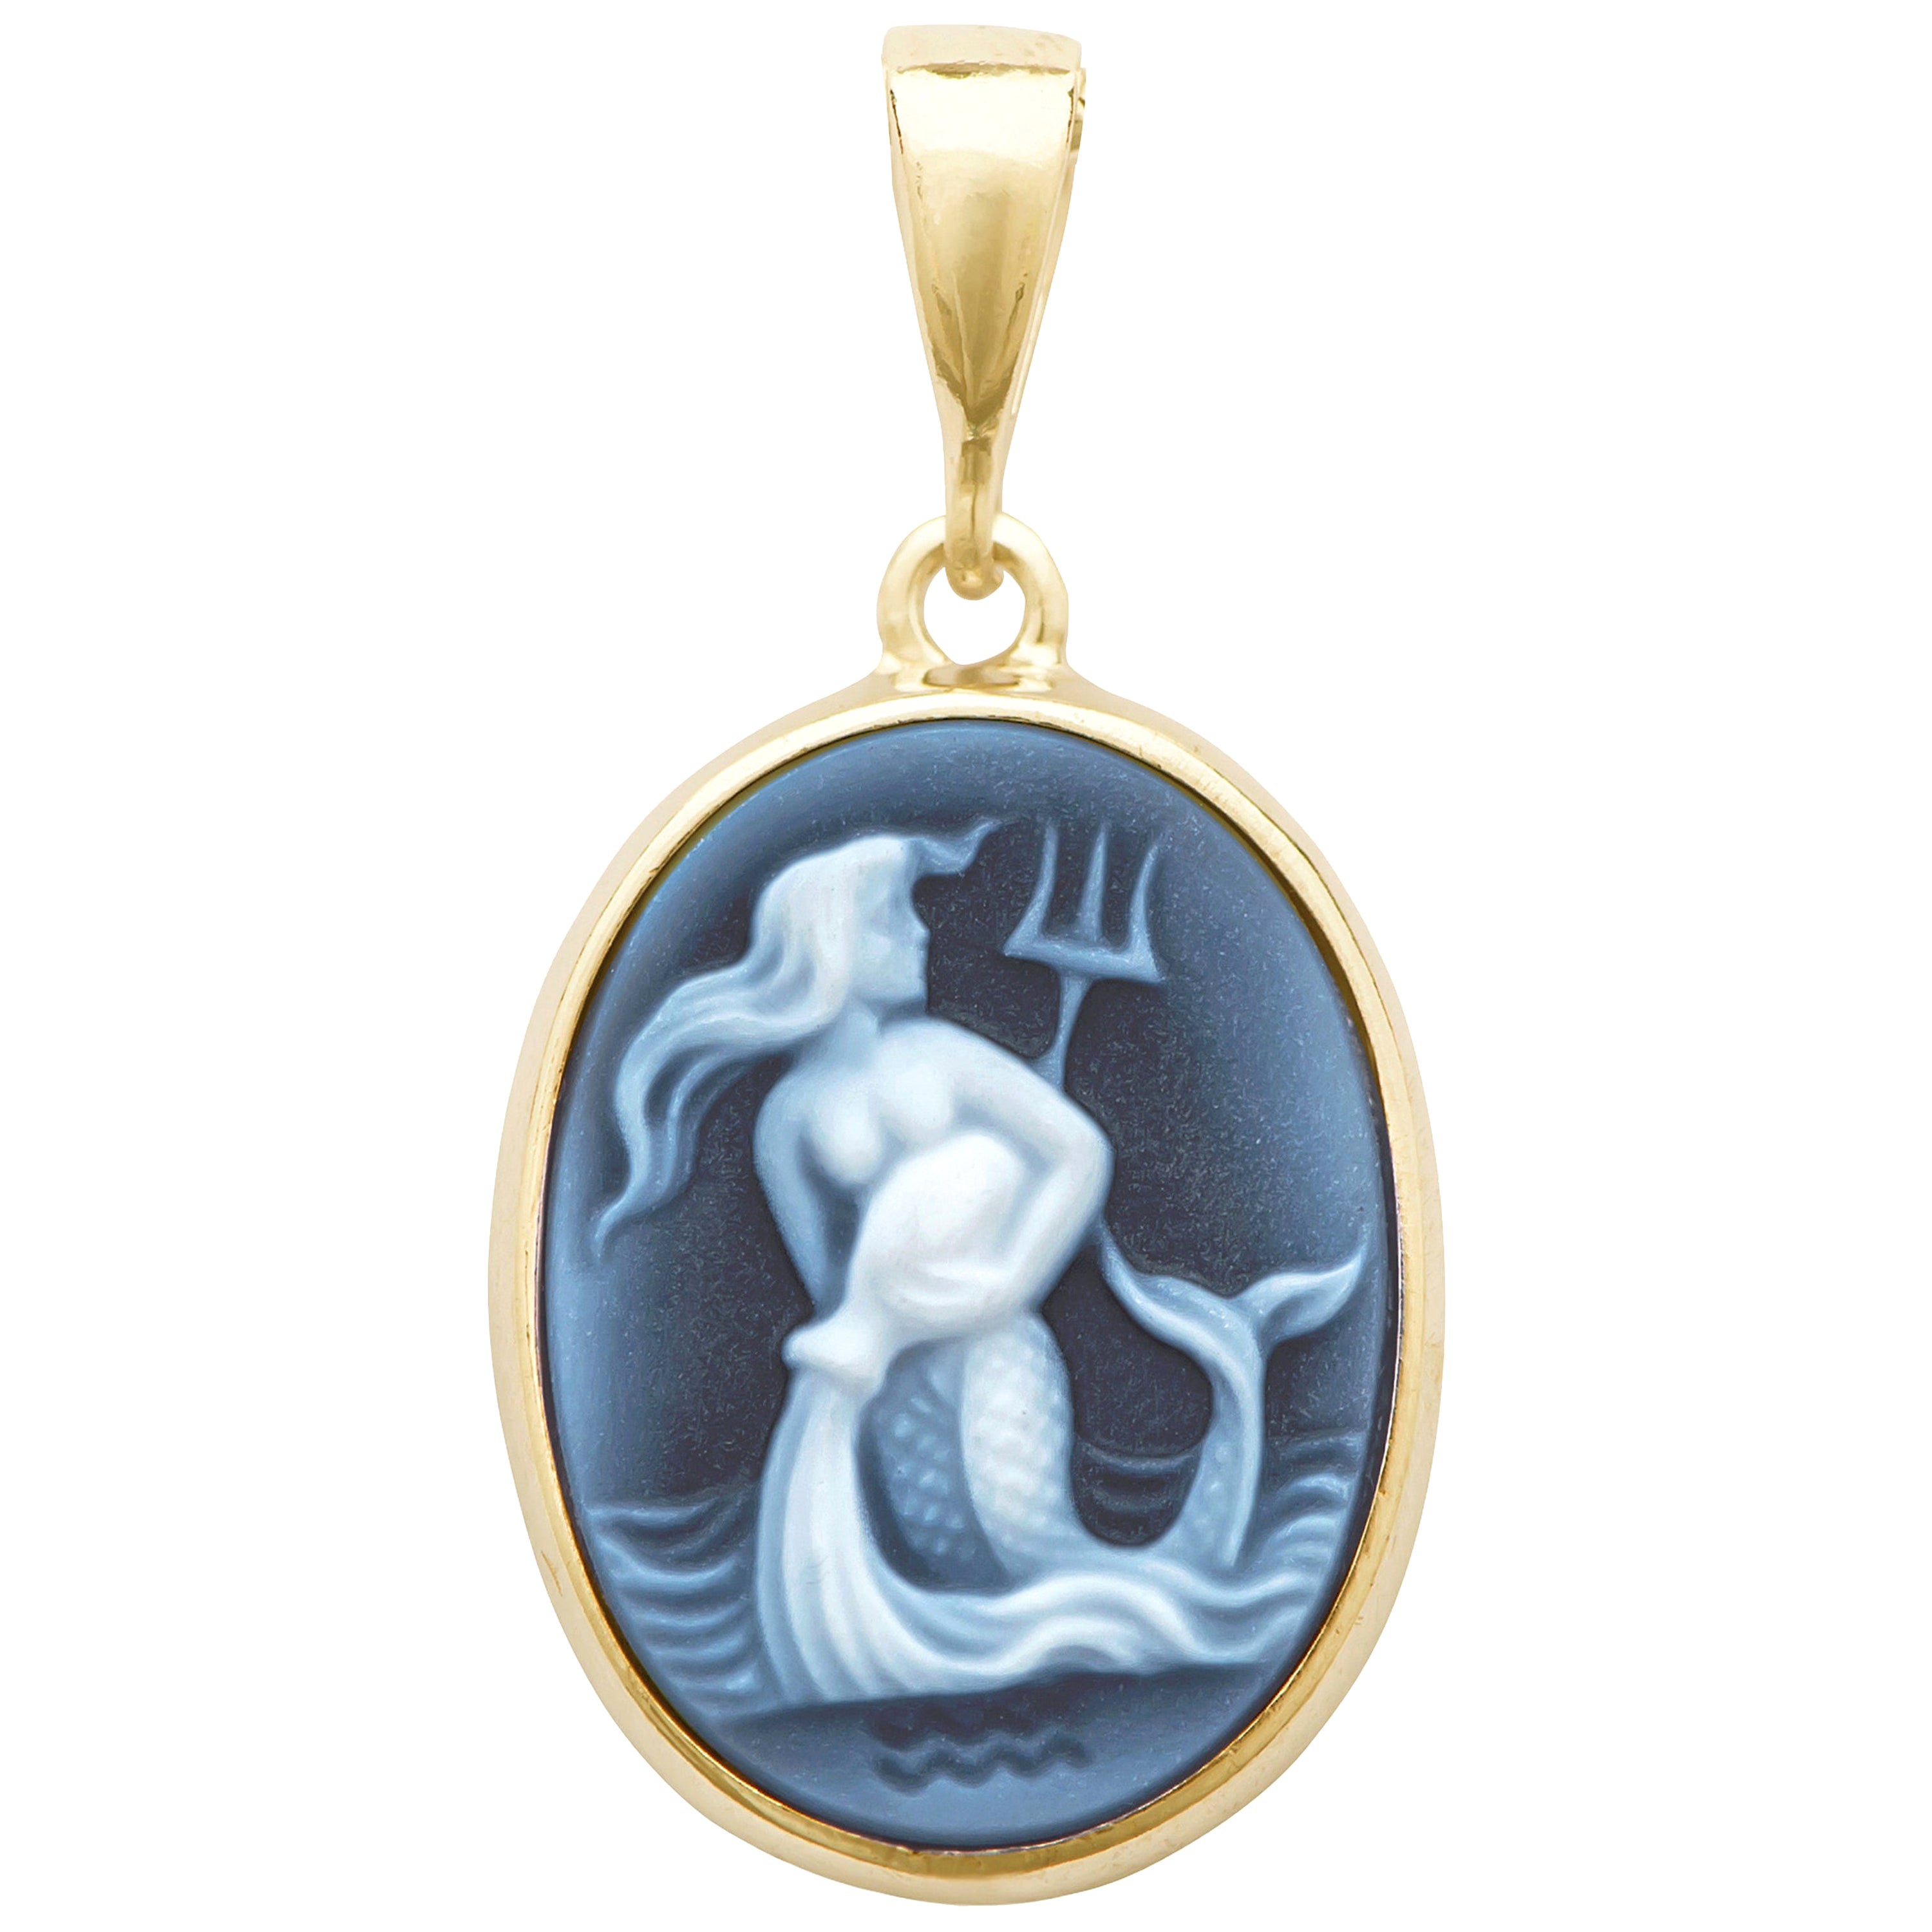 Aquarius Zodiac Achat Kamee 925 Sterlingsilber Anhänger Halskette